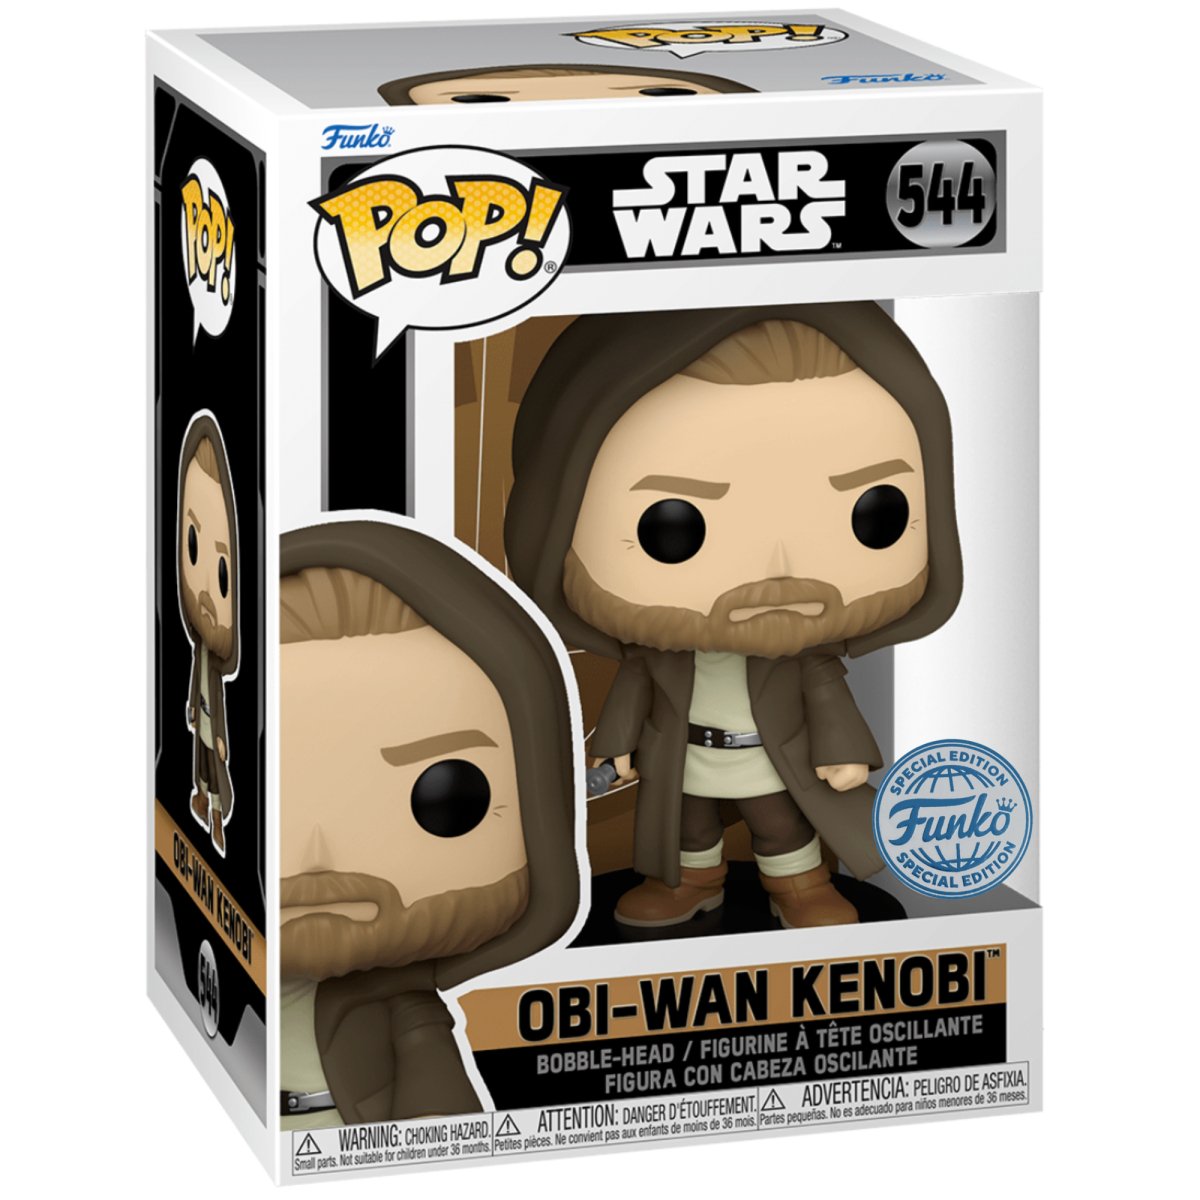 Star Wars - Obi-Wan Kenobi (Special Editiion) #544 - Funko Pop! Vinyl Star Wars - Persona Toys